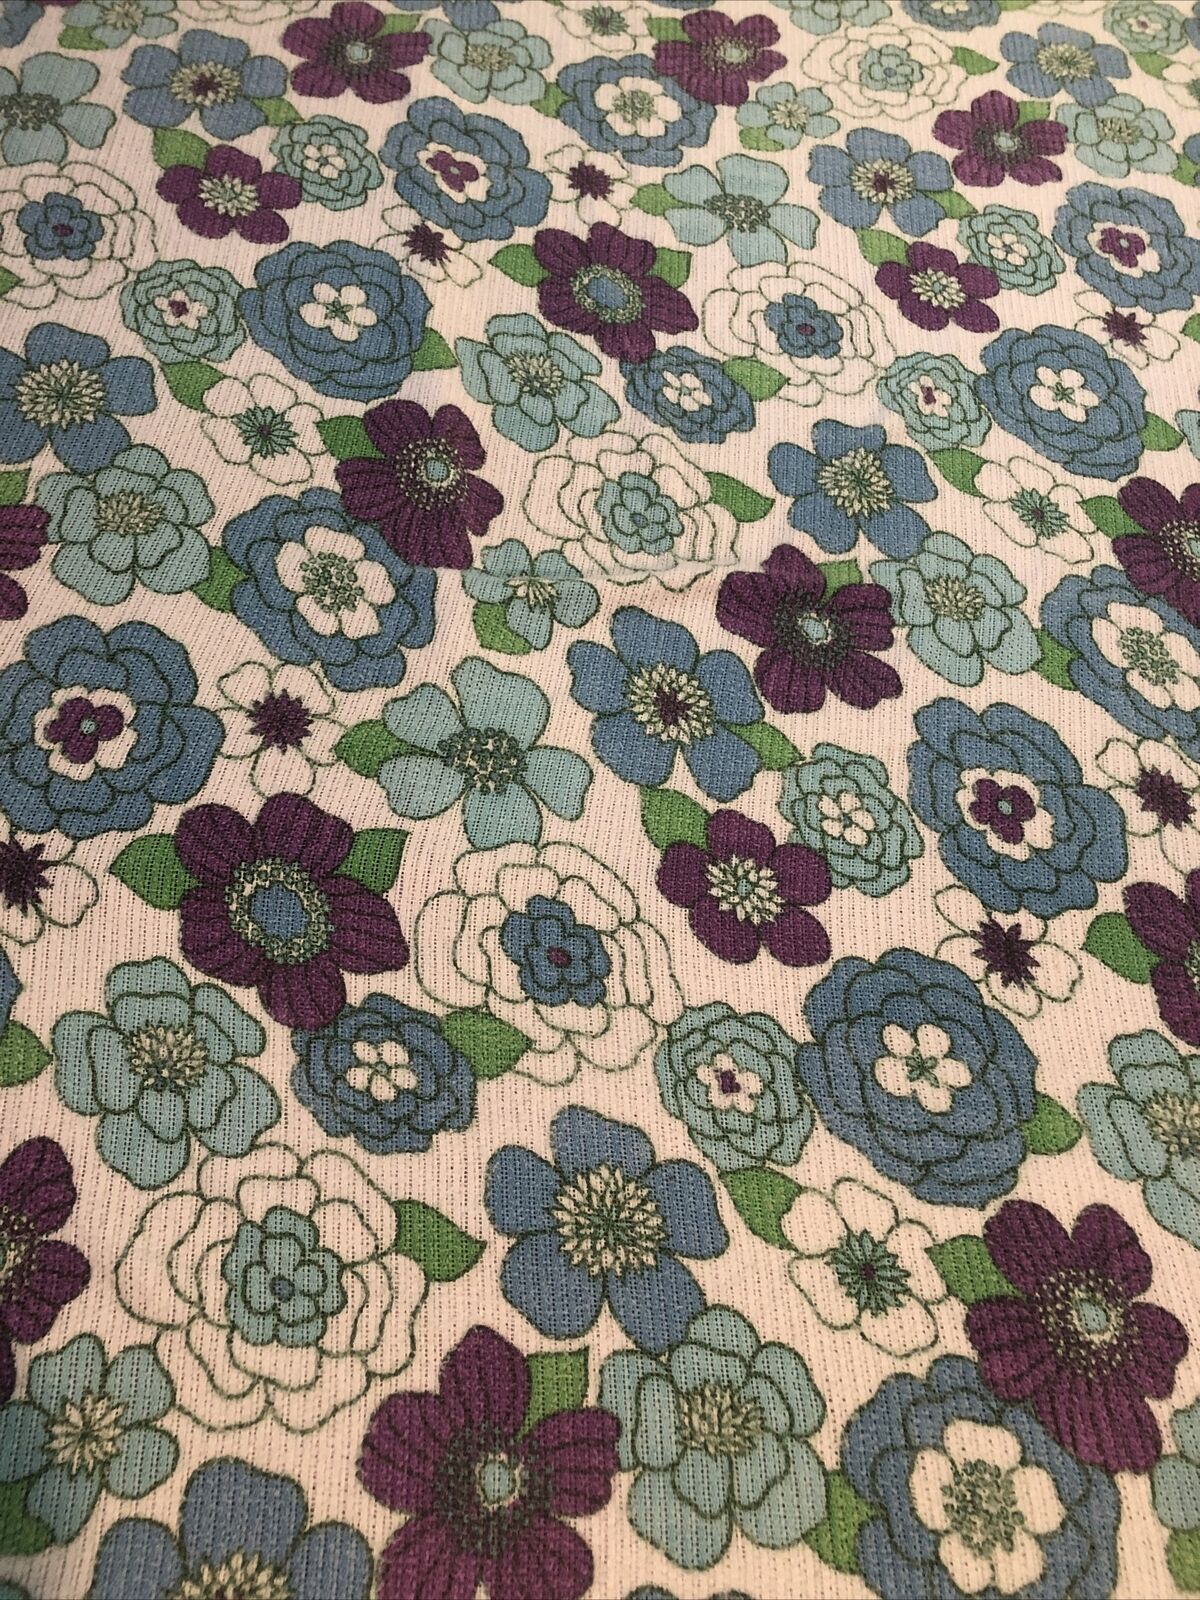 Vintage 60's 70's Flower Floral Print Cotton Blanket 88 x 70 Multi-Color